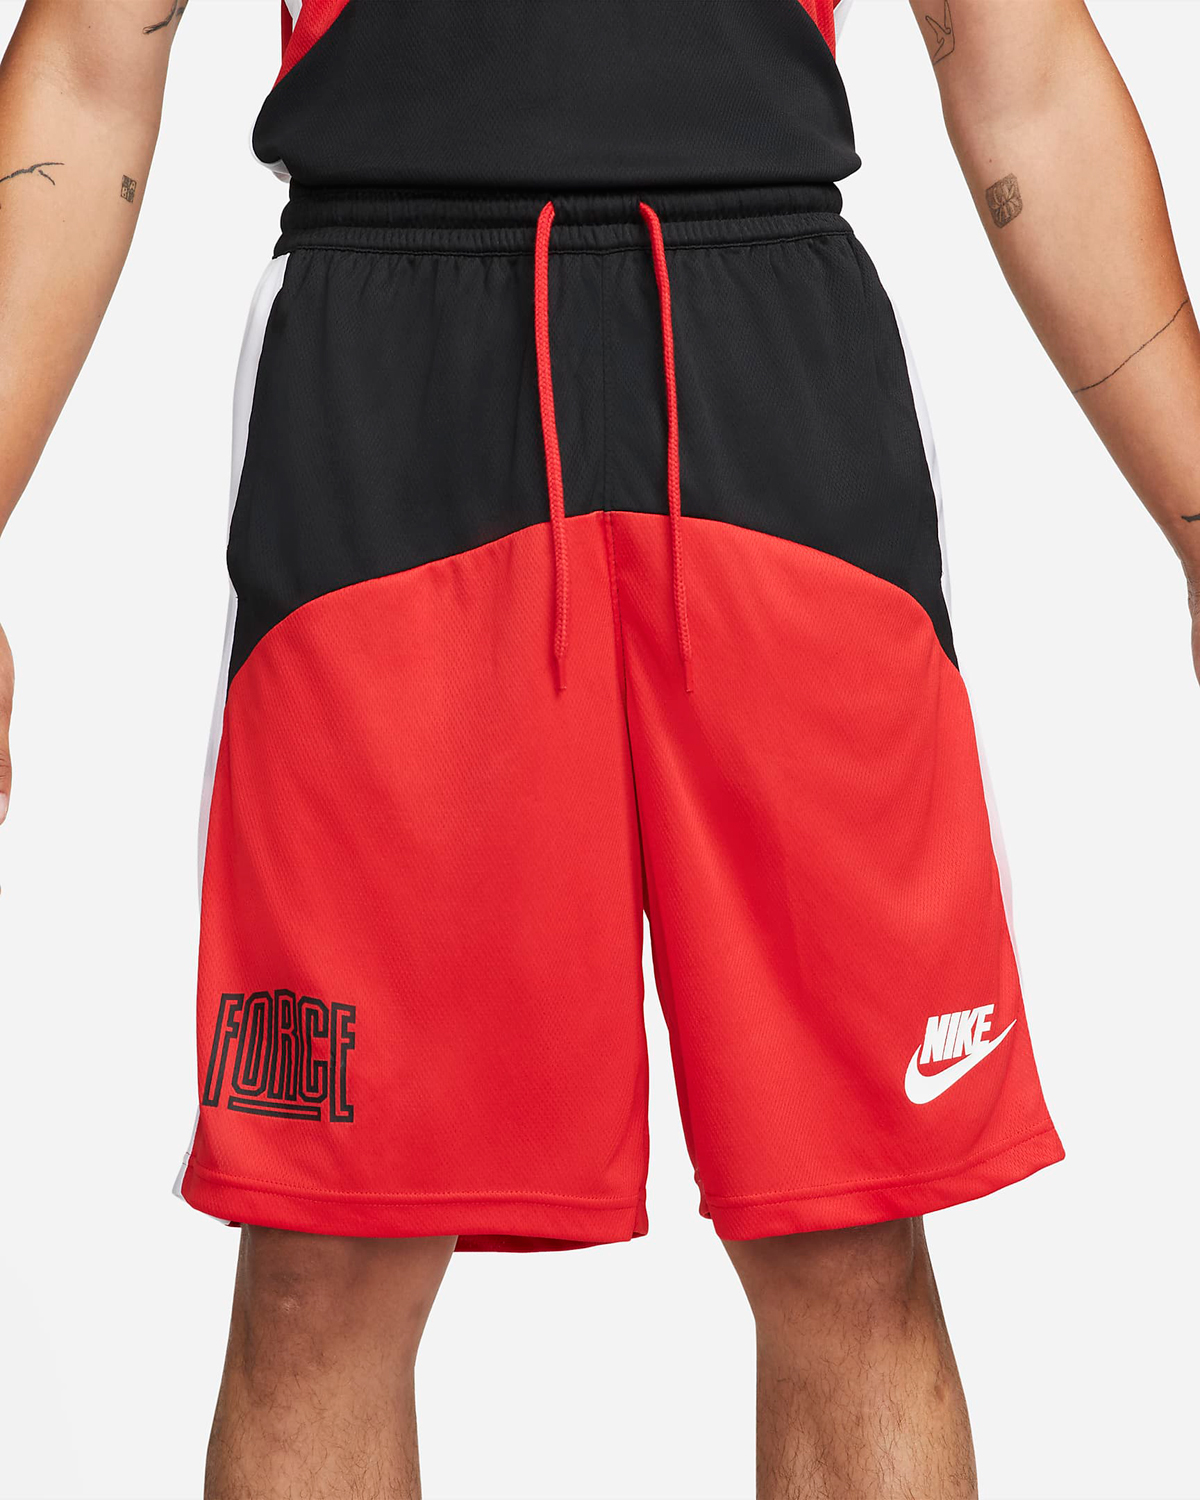 Nike-Starting-5-Basketball-Shorts-University-Red-Black-White-2